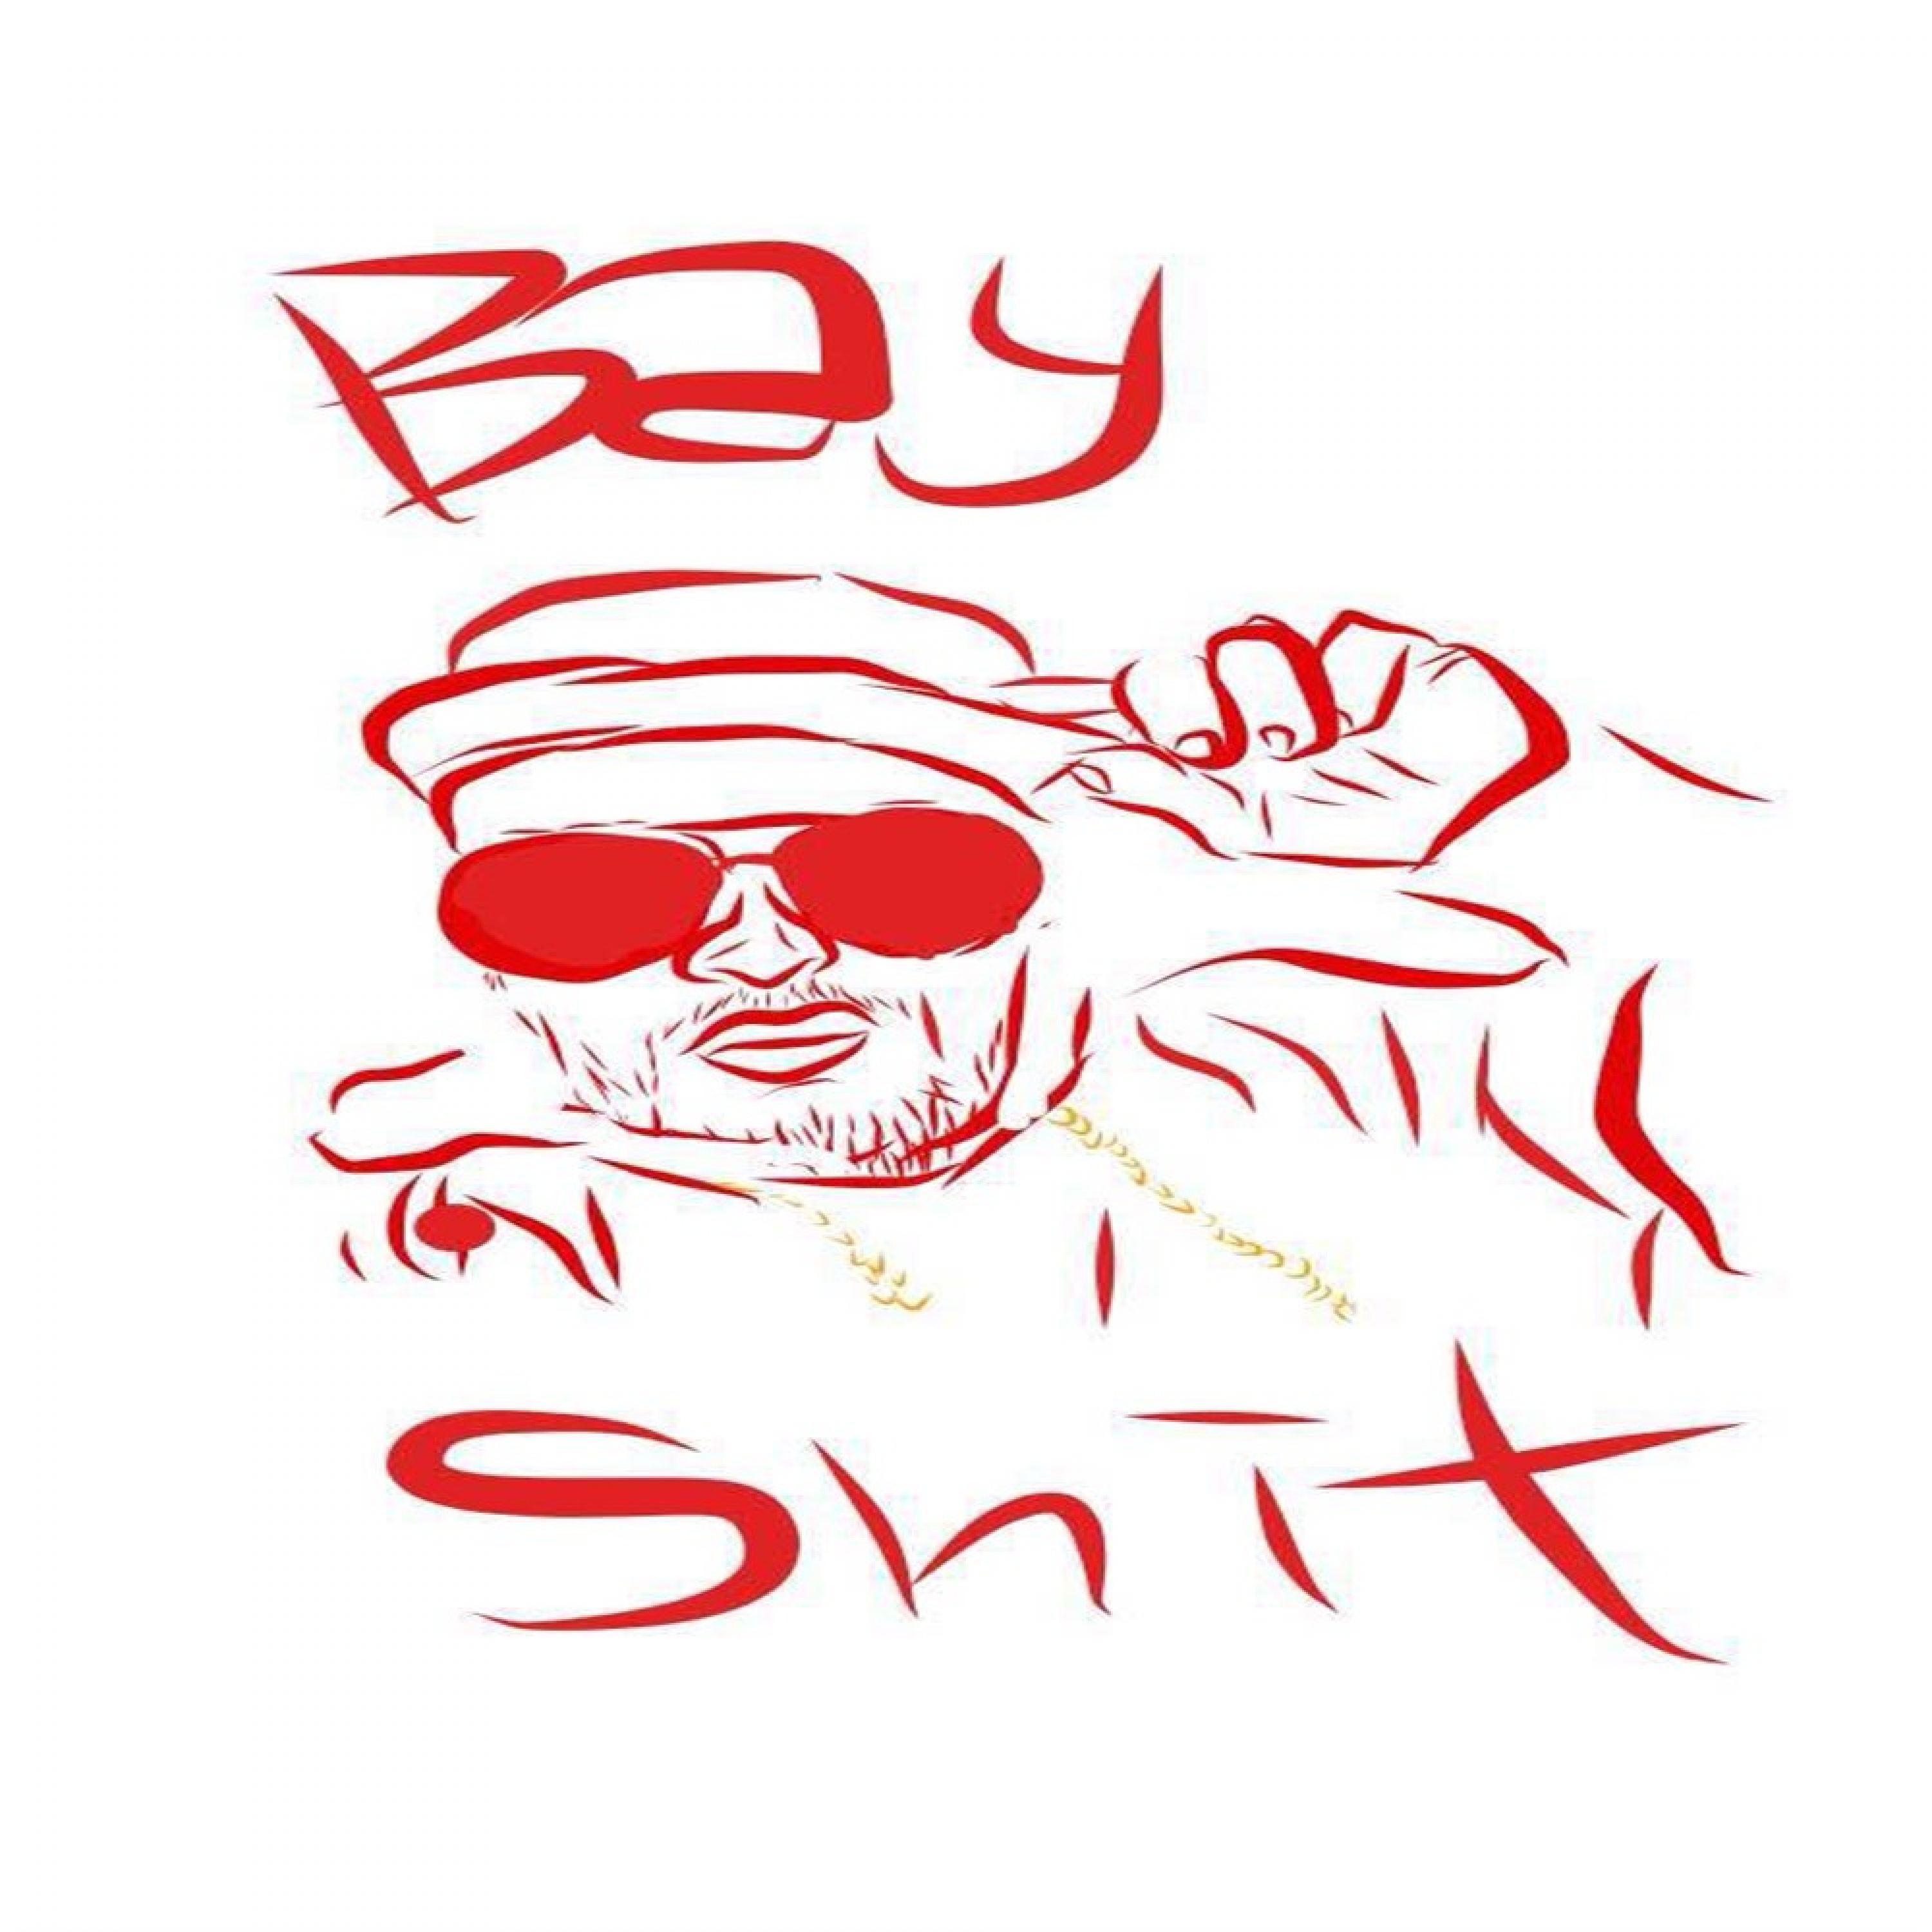 Bay **** (feat. Rich Rocka, Berner & Goldie Gold) - Single